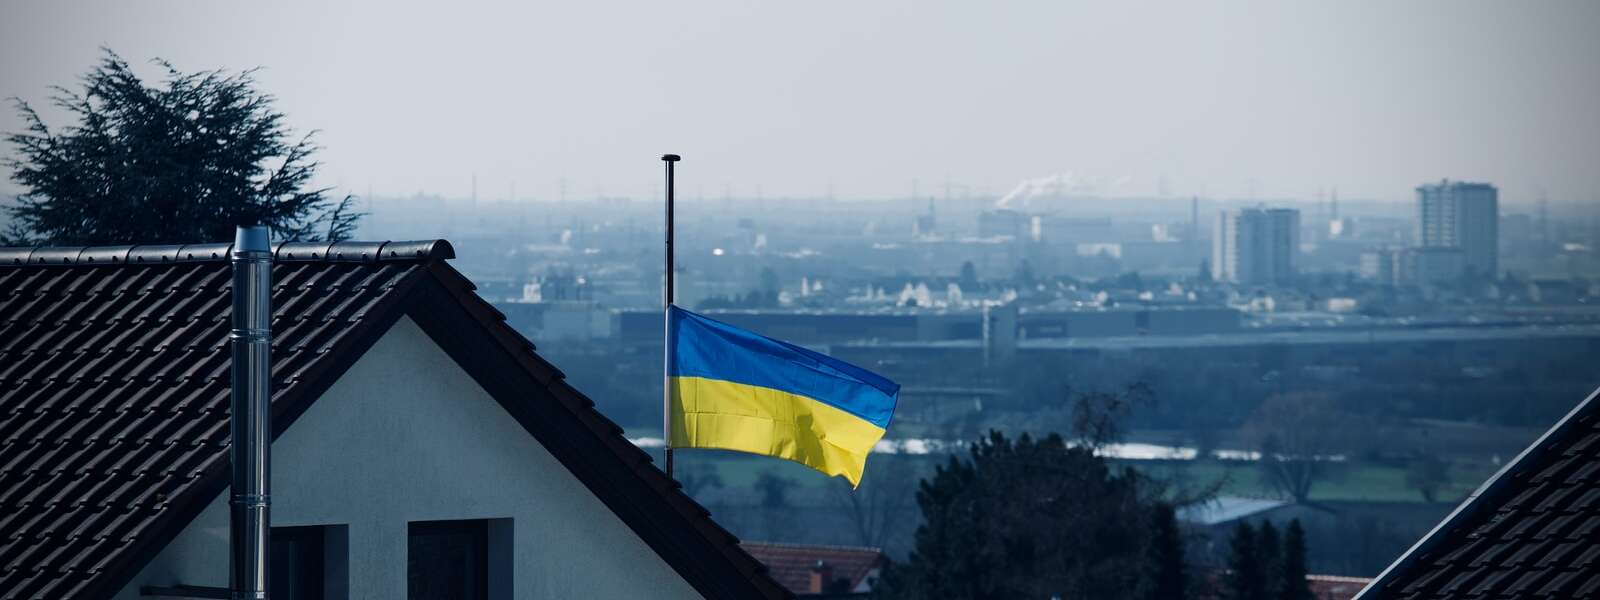 The Ukrainian flag (top half blue, bottom half yellow) flies at half mast in Germany.